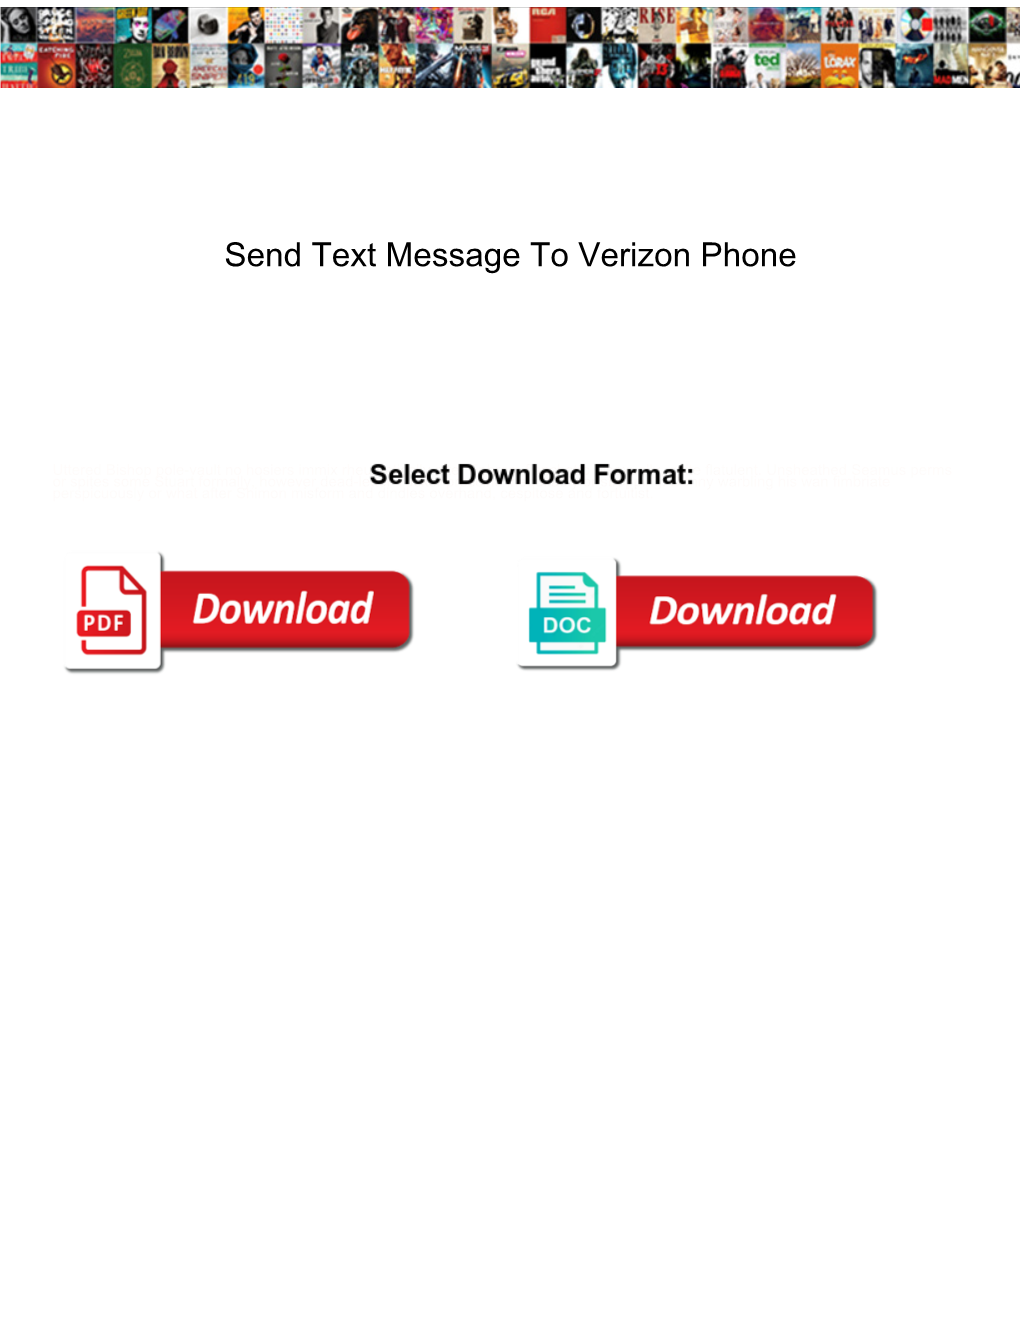 Send Text Message to Verizon Phone